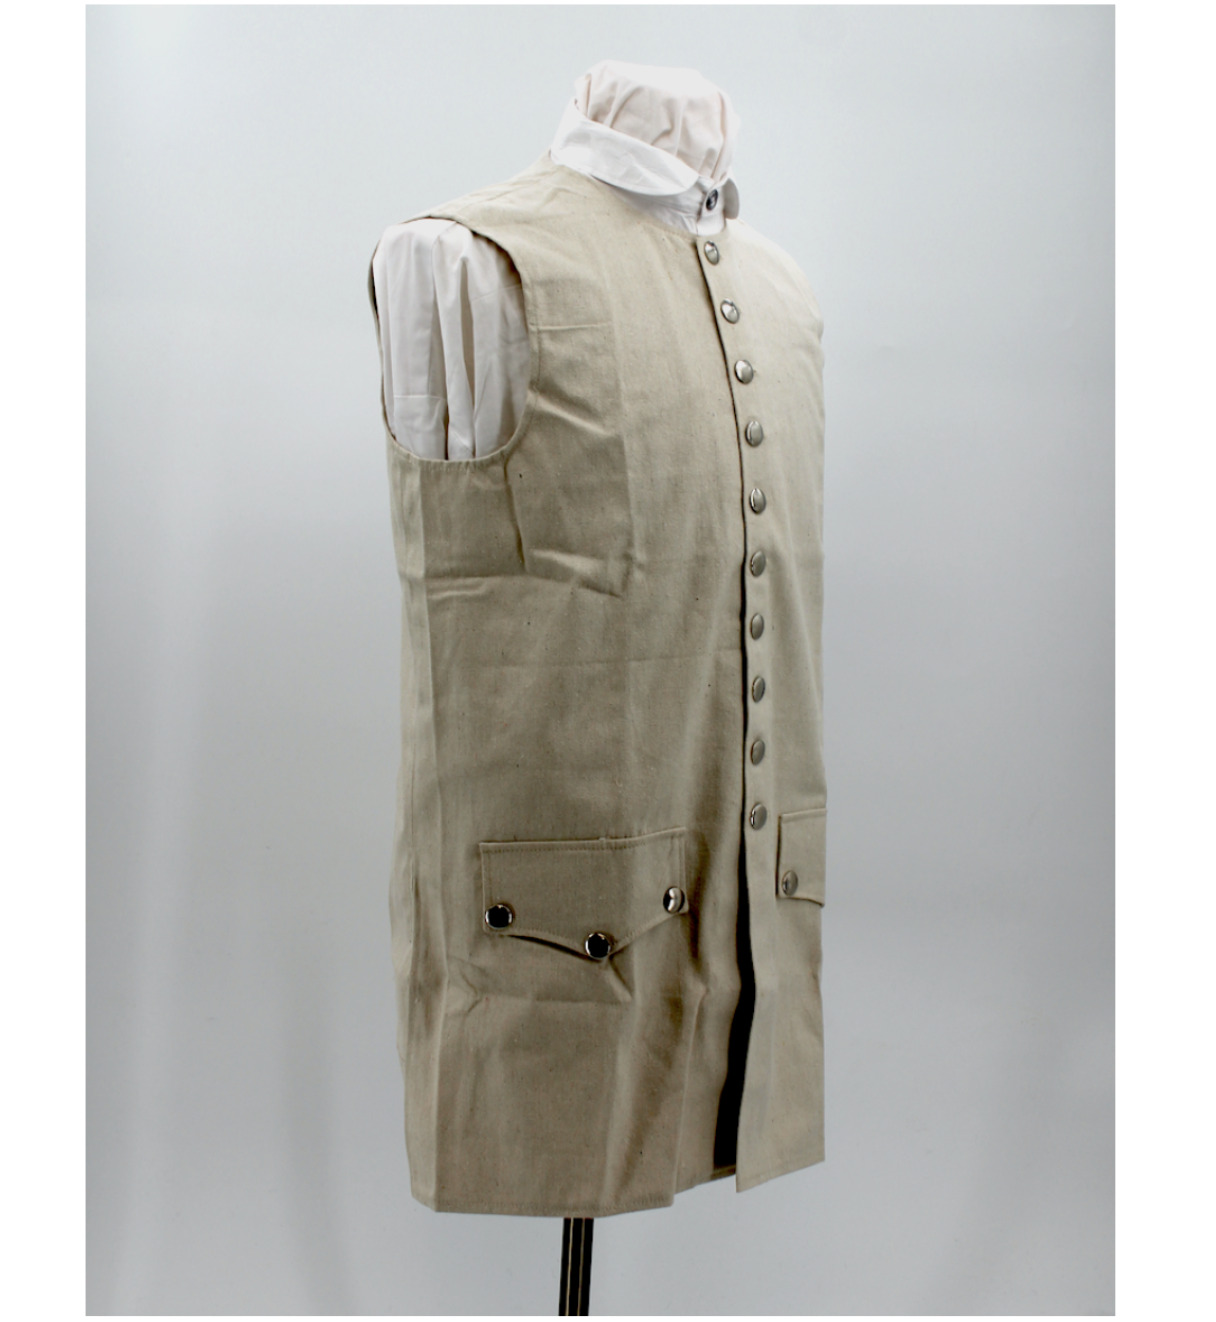 Osnaburg Colonial Waistcoat French & Indian, Revolutionary War -Size XXL 50/52